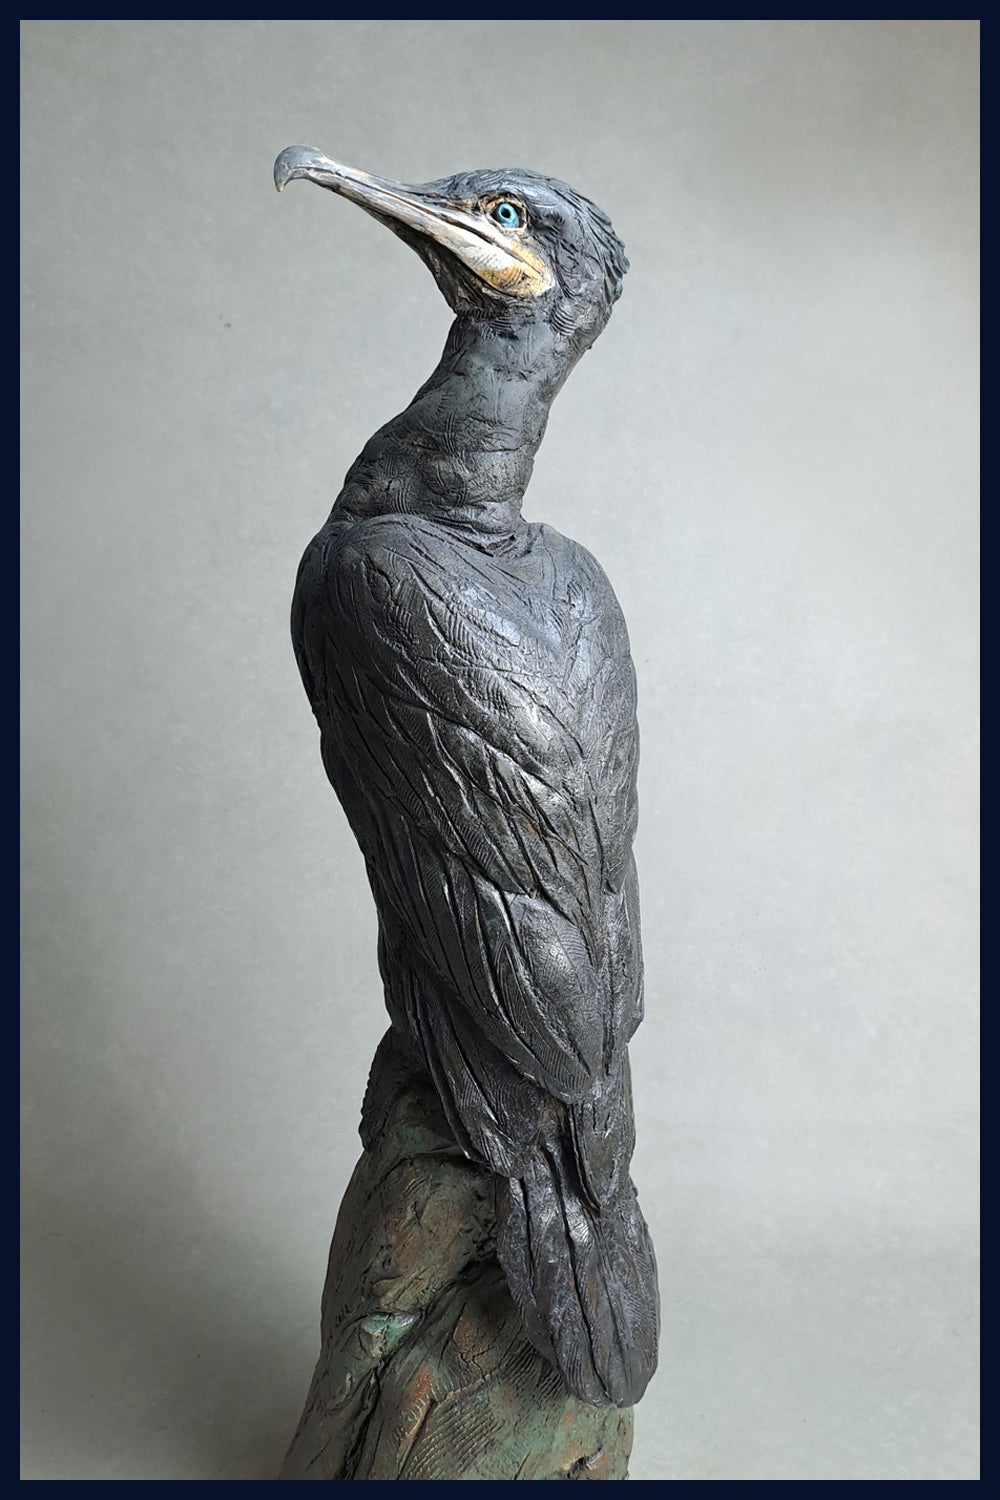 Cormorant Ceramic Sculpture by David Cooke